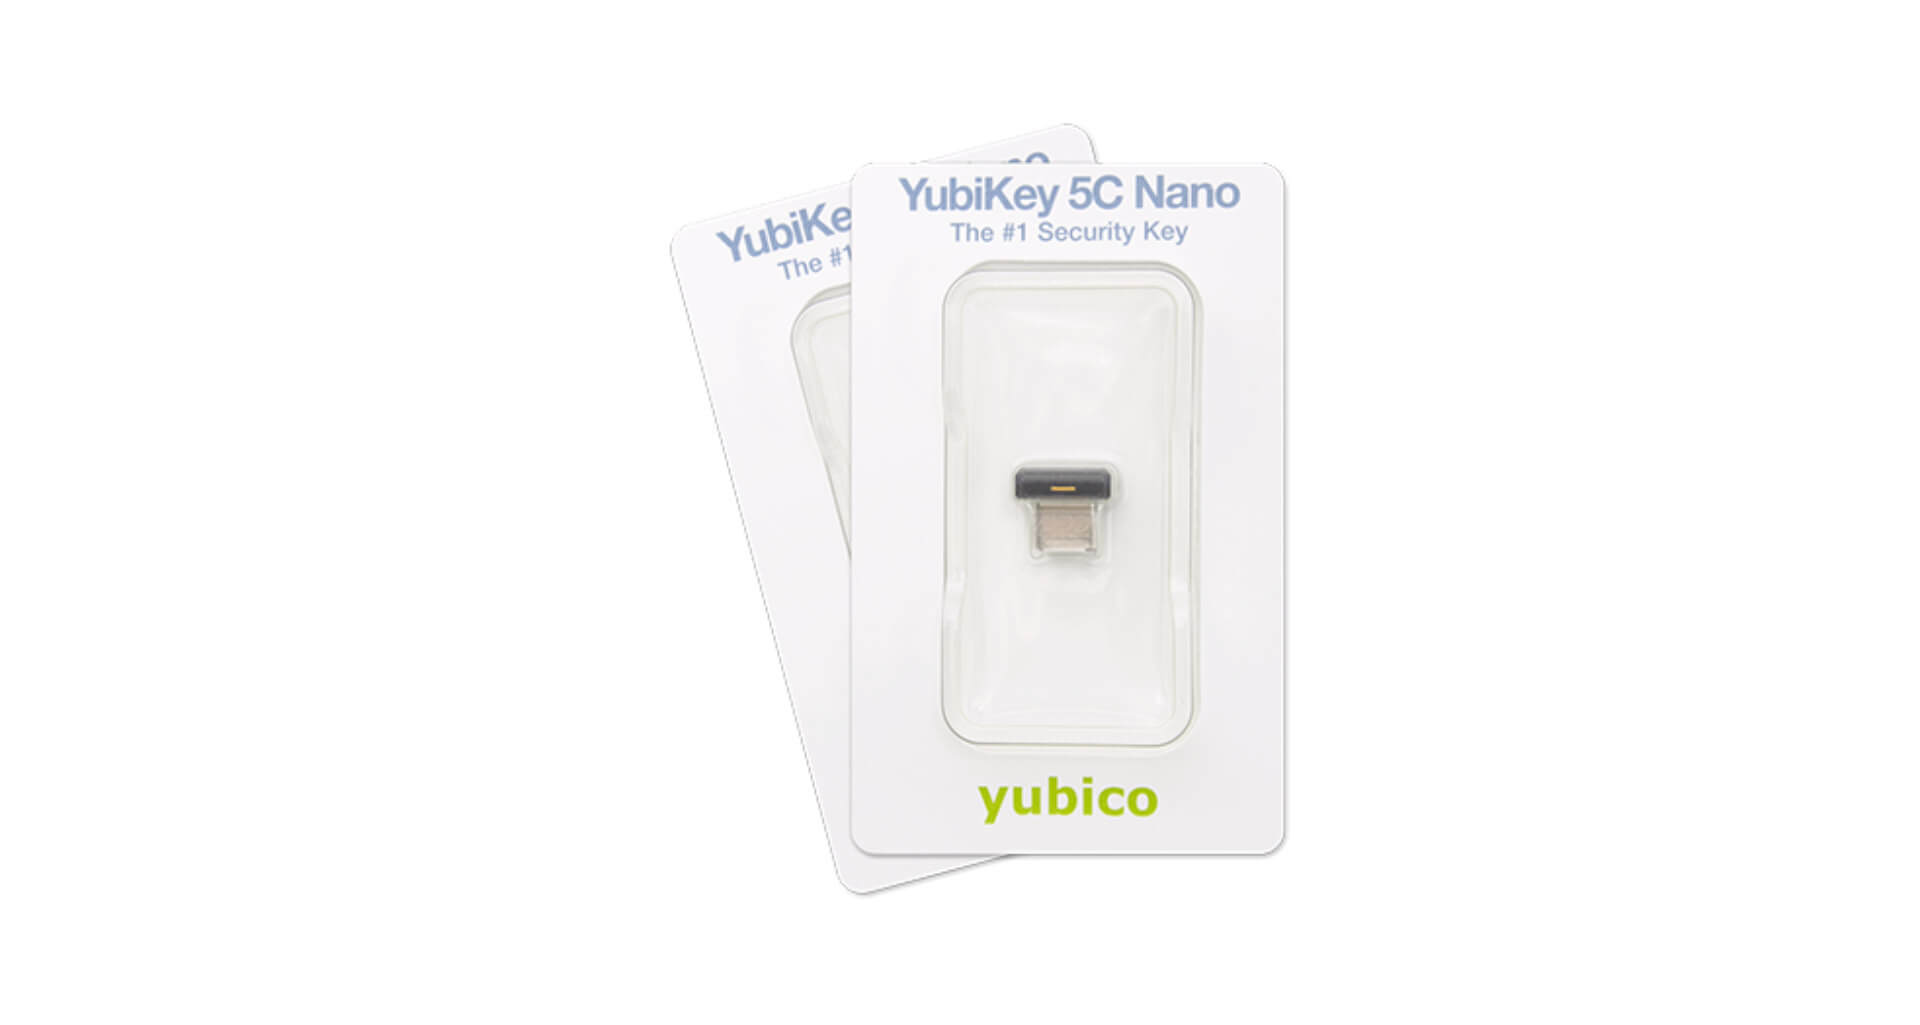 Yubikey 5C Nano - Protect your digital world with YubiKey